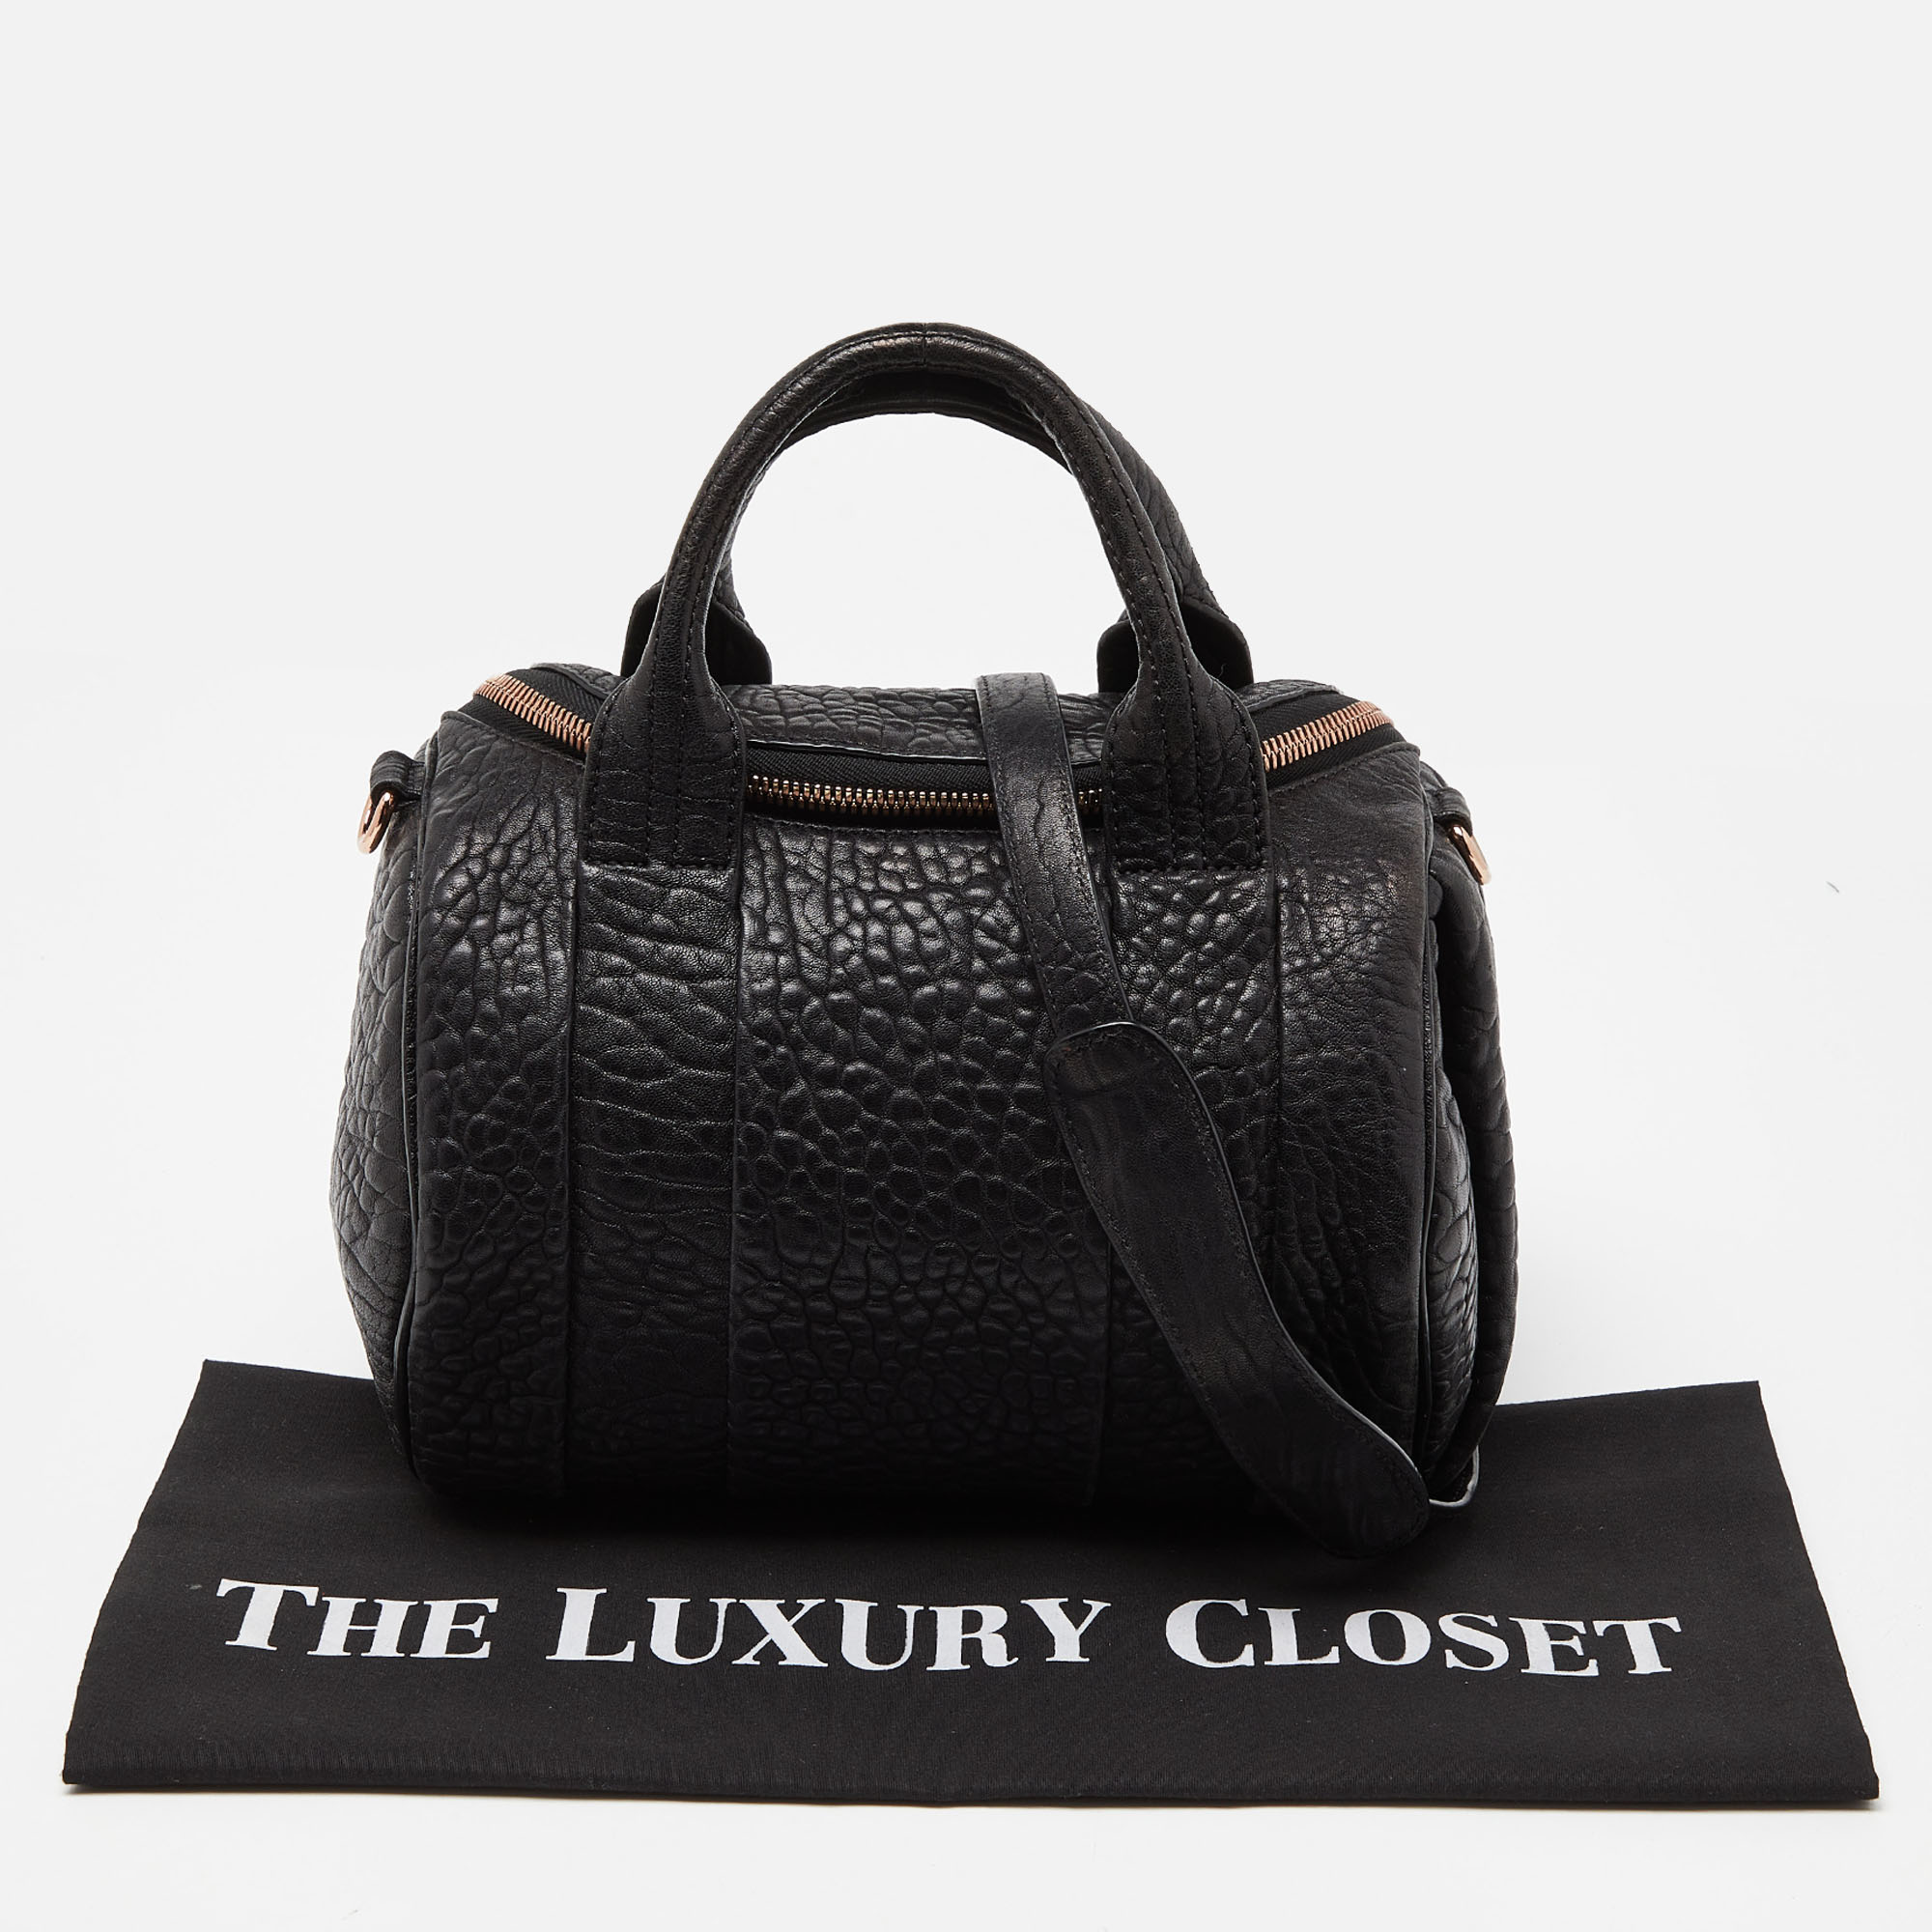 Alexander Wang Black Textured Leather Rocco Bag